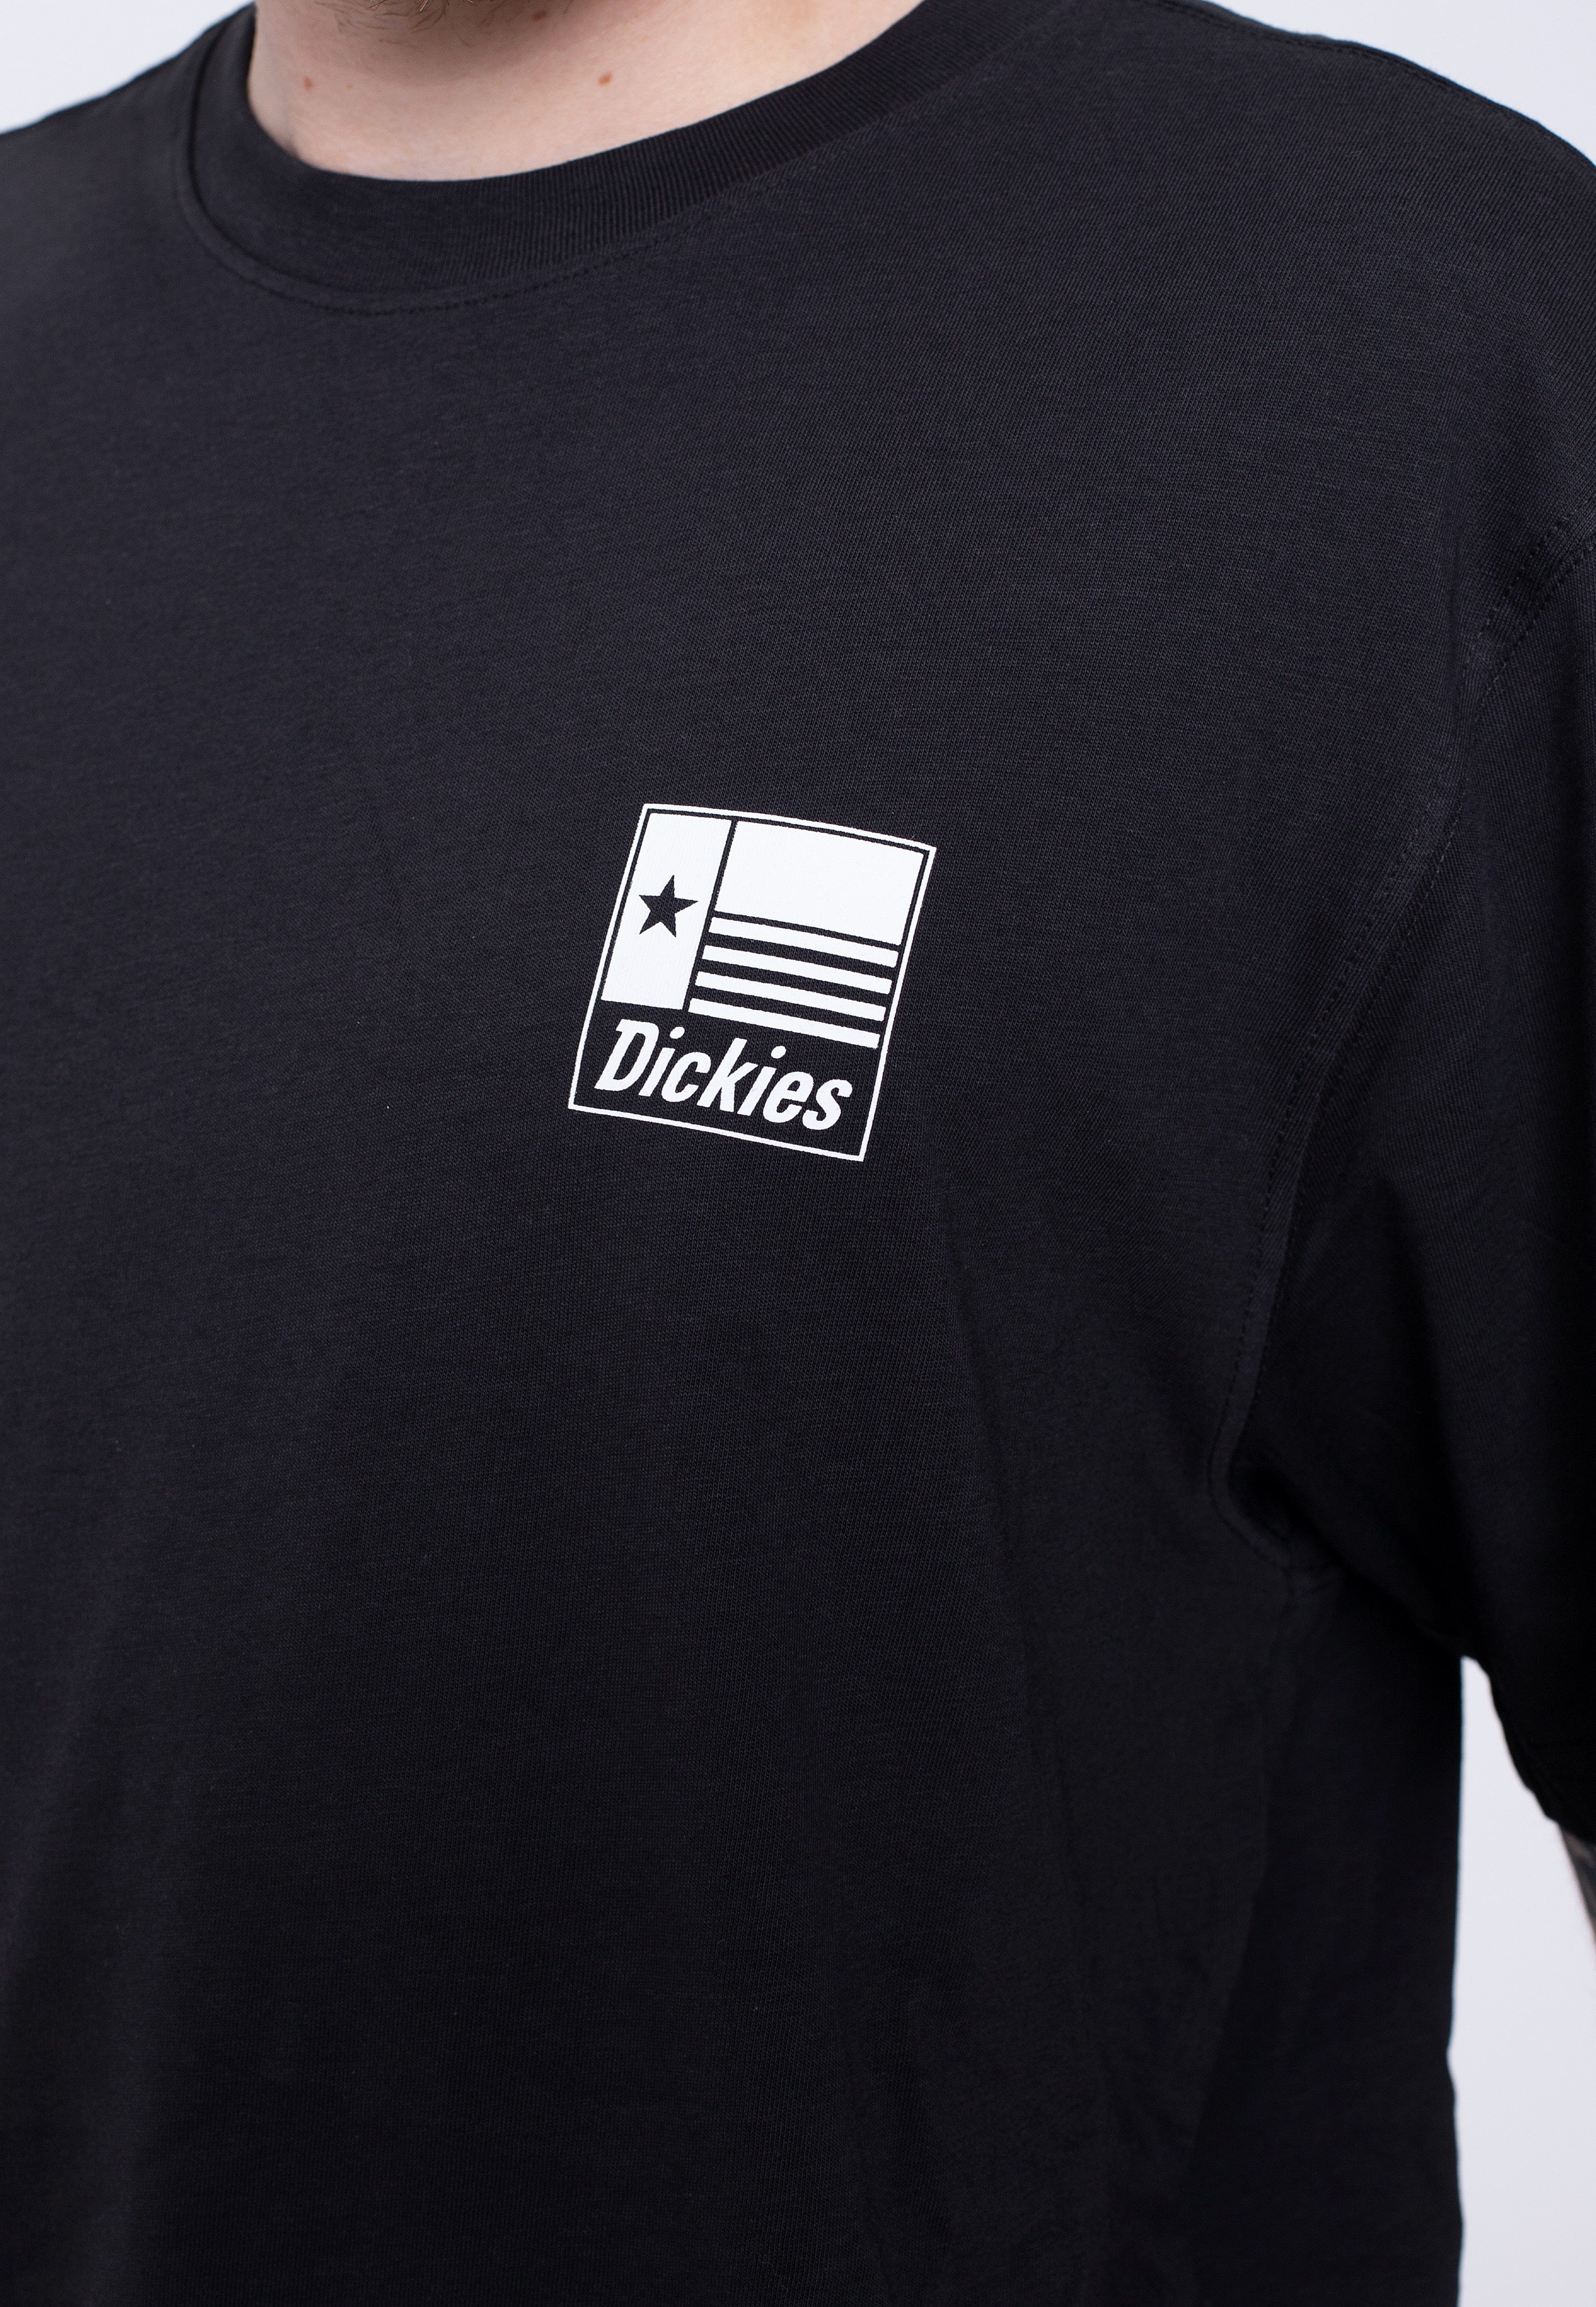 Dickies - Taylor Black - T-Shirt